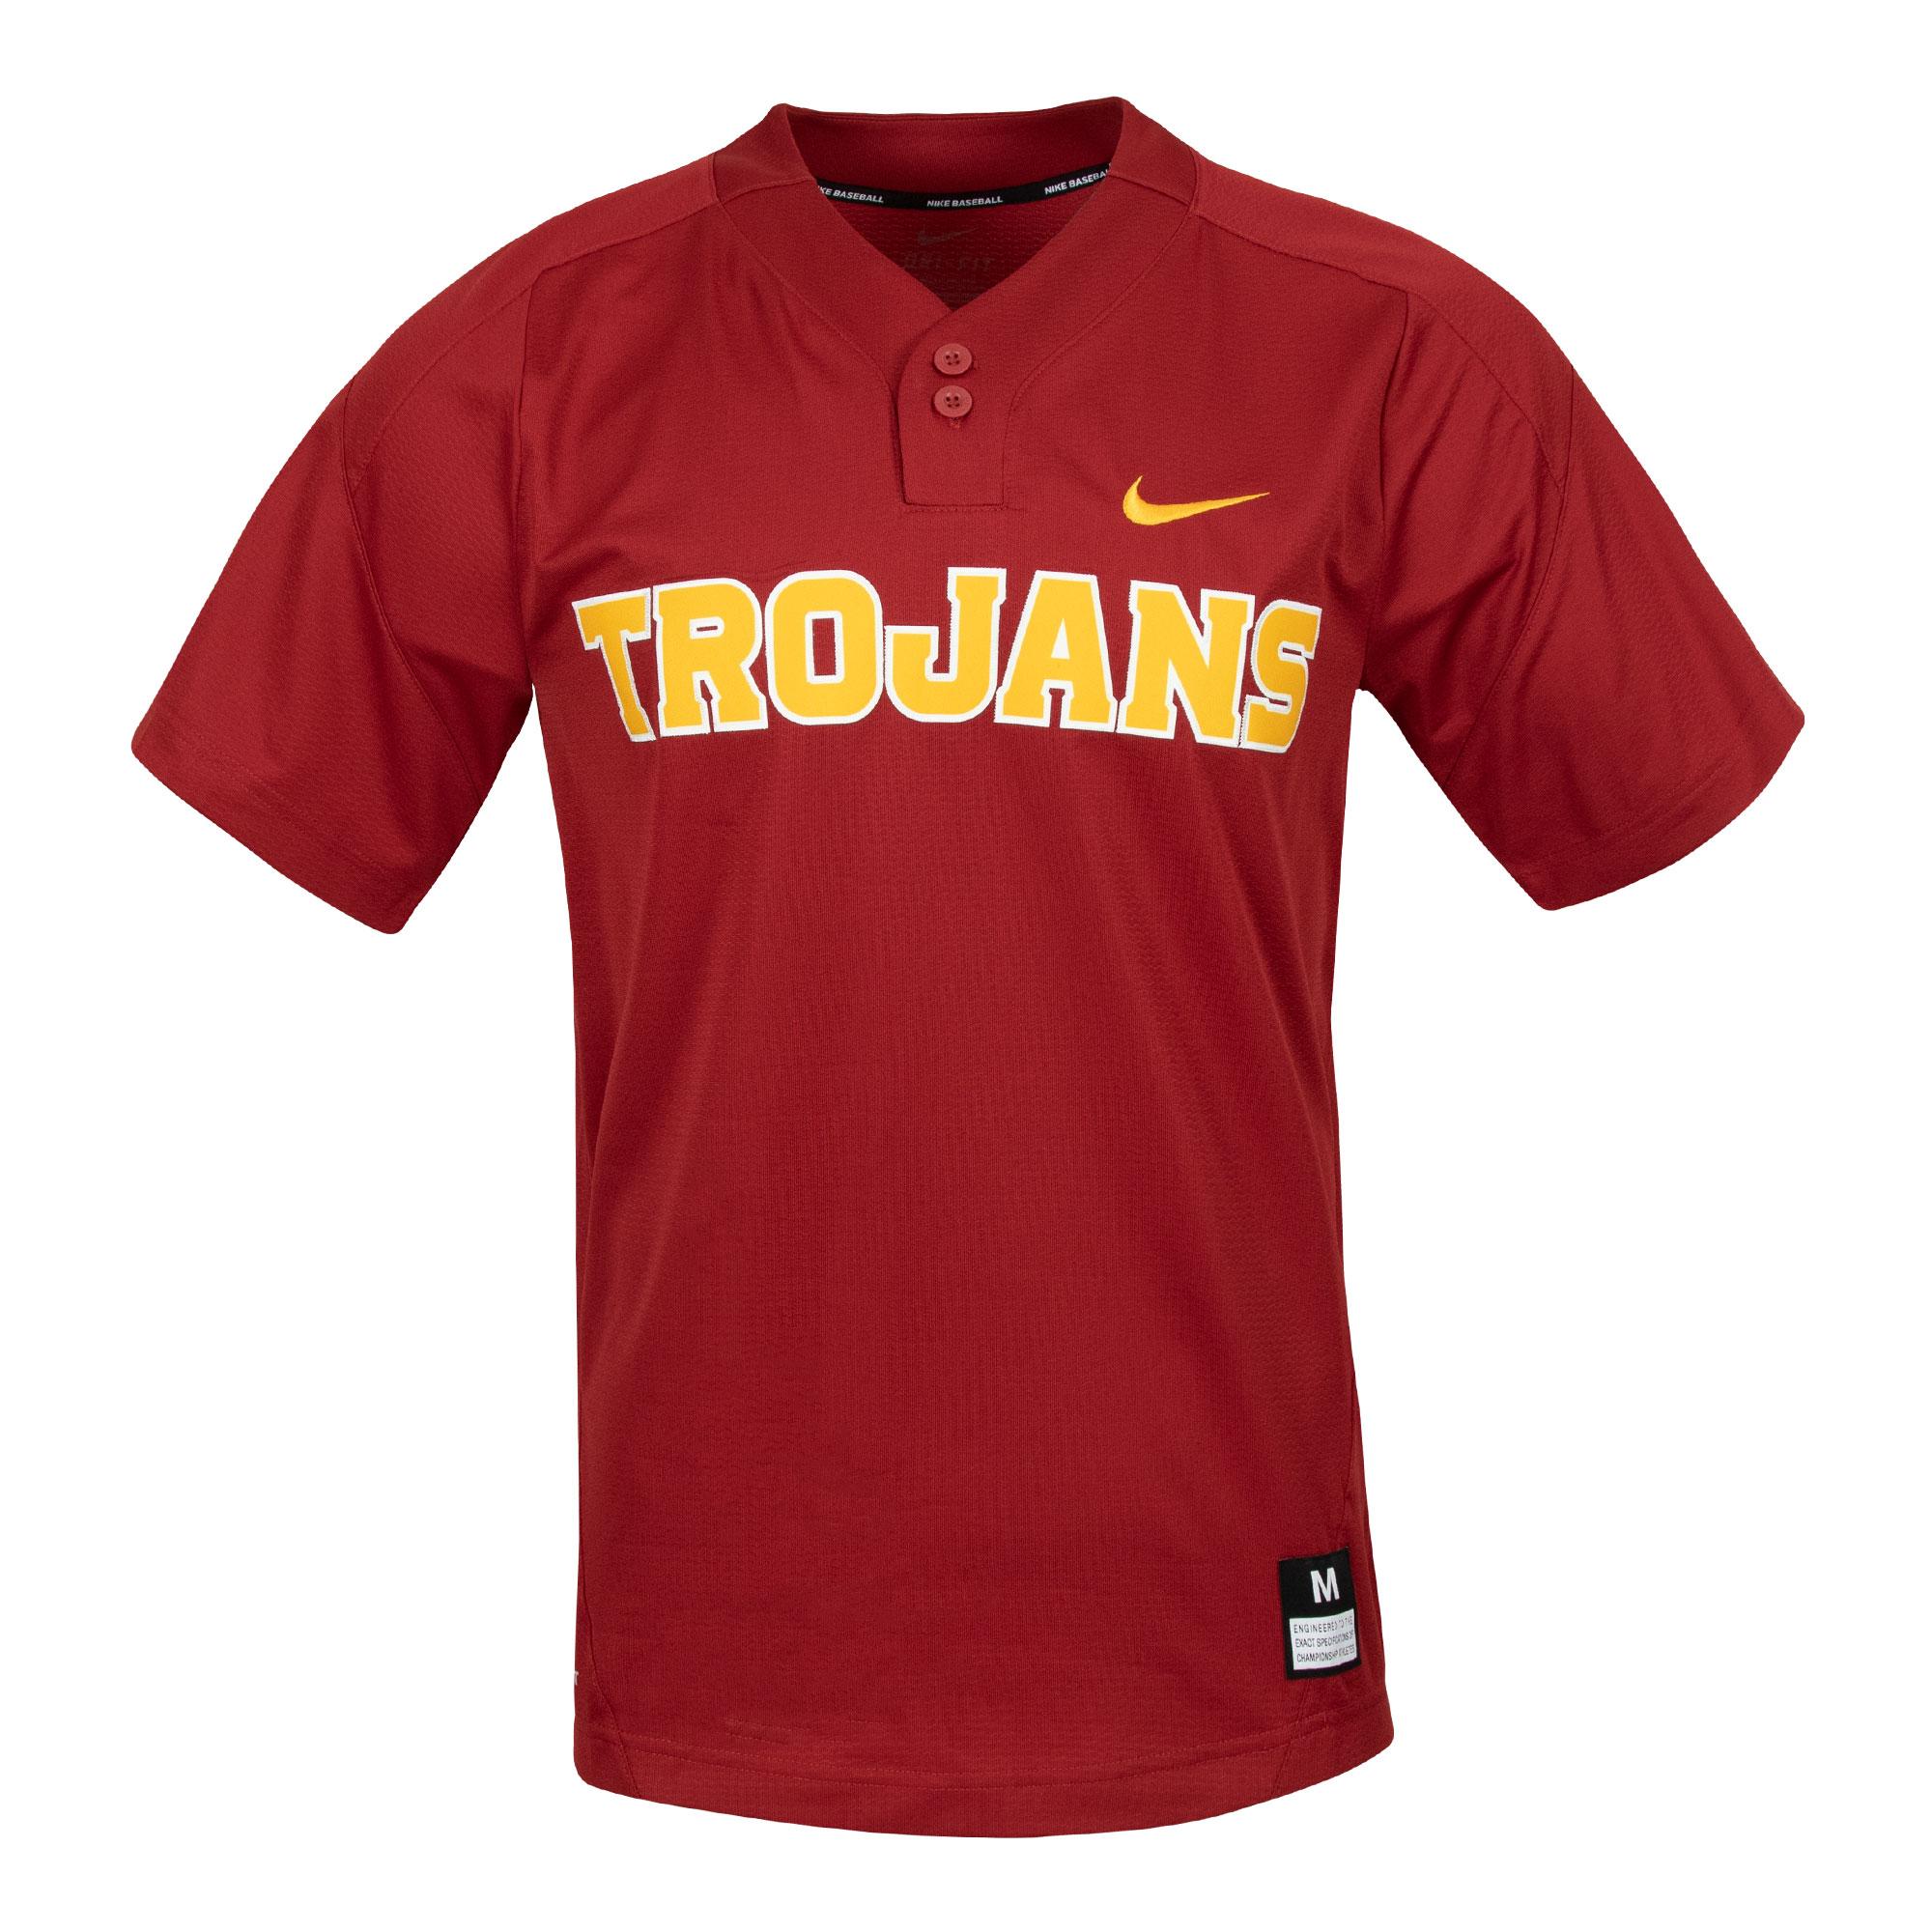 Trojans BCS Mens 2 Button Replica Baseball Jersey image01